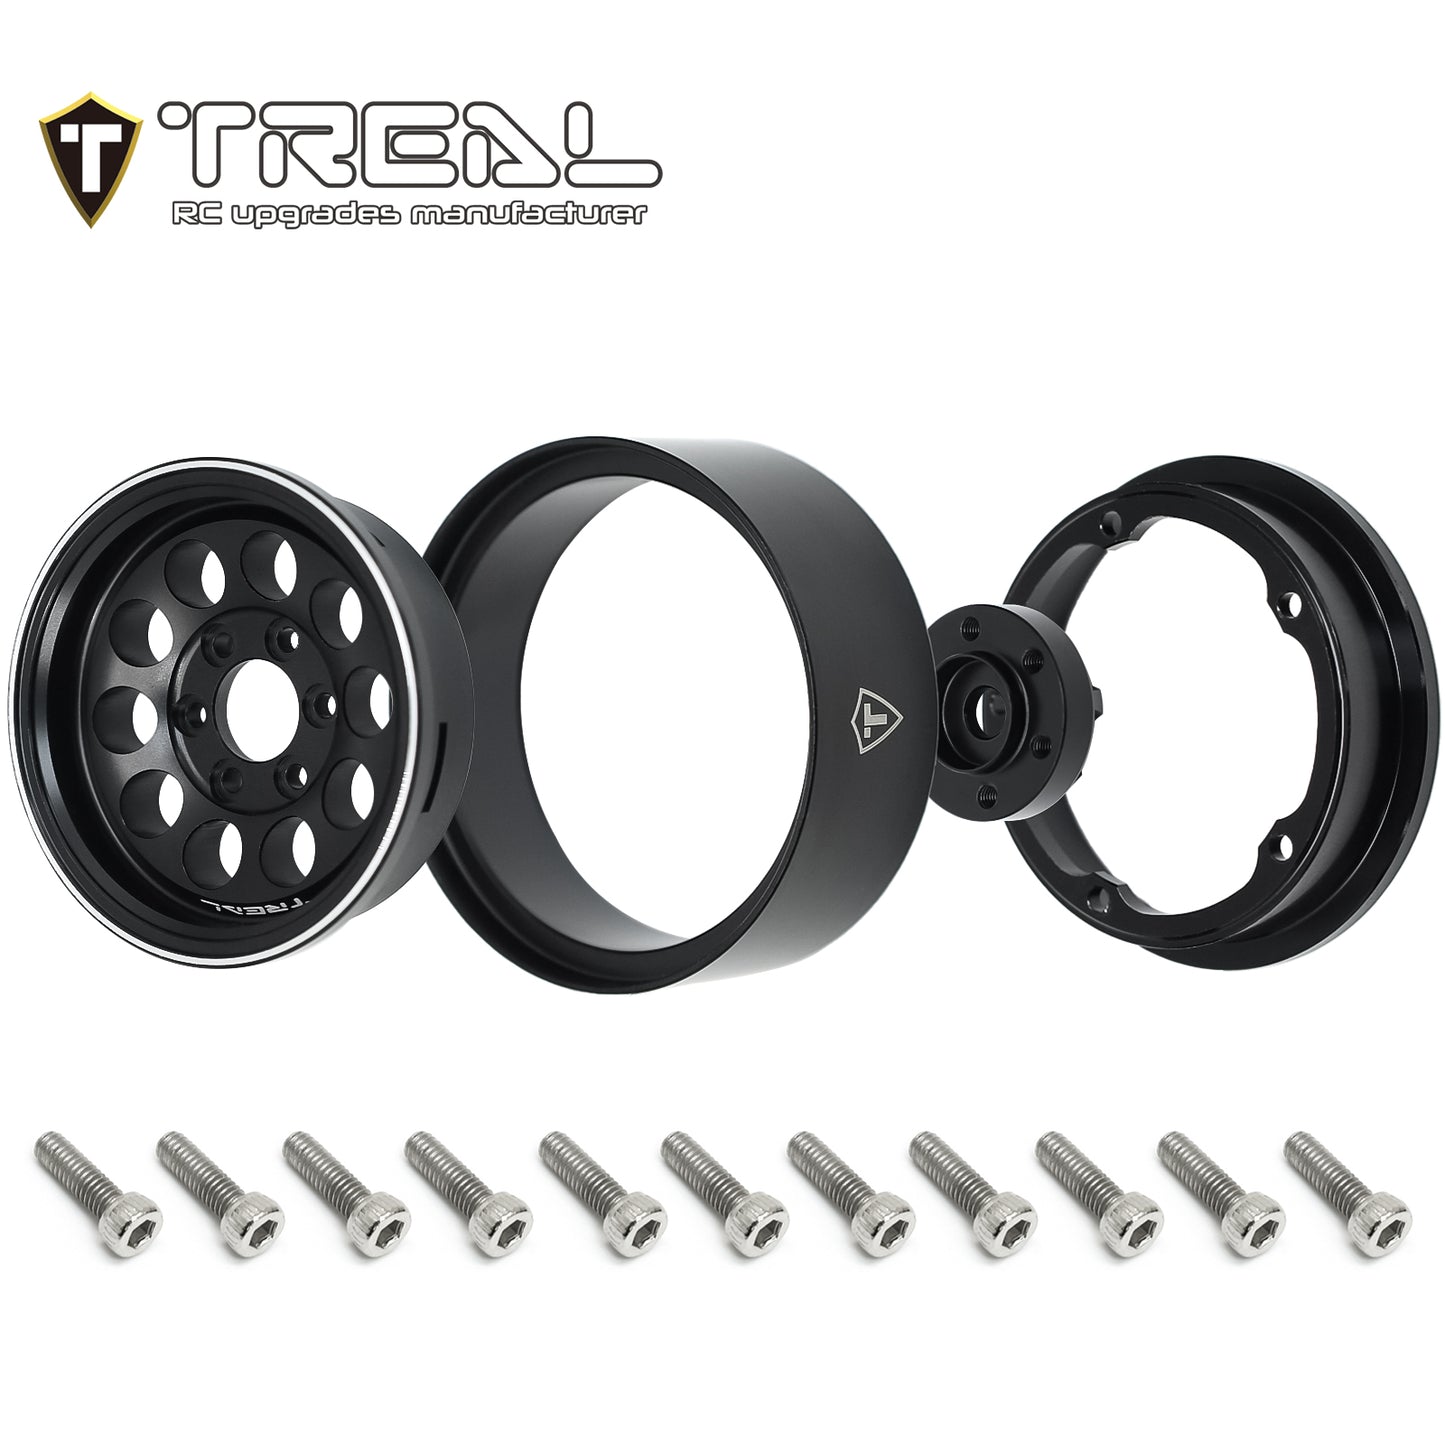 TREAL 1.9" Beadlock Wheels (4) 10-Hole Aluminum CNC Machined Wheels for SCX10 III TRX4 D90 1:10 RC Cars --Type F